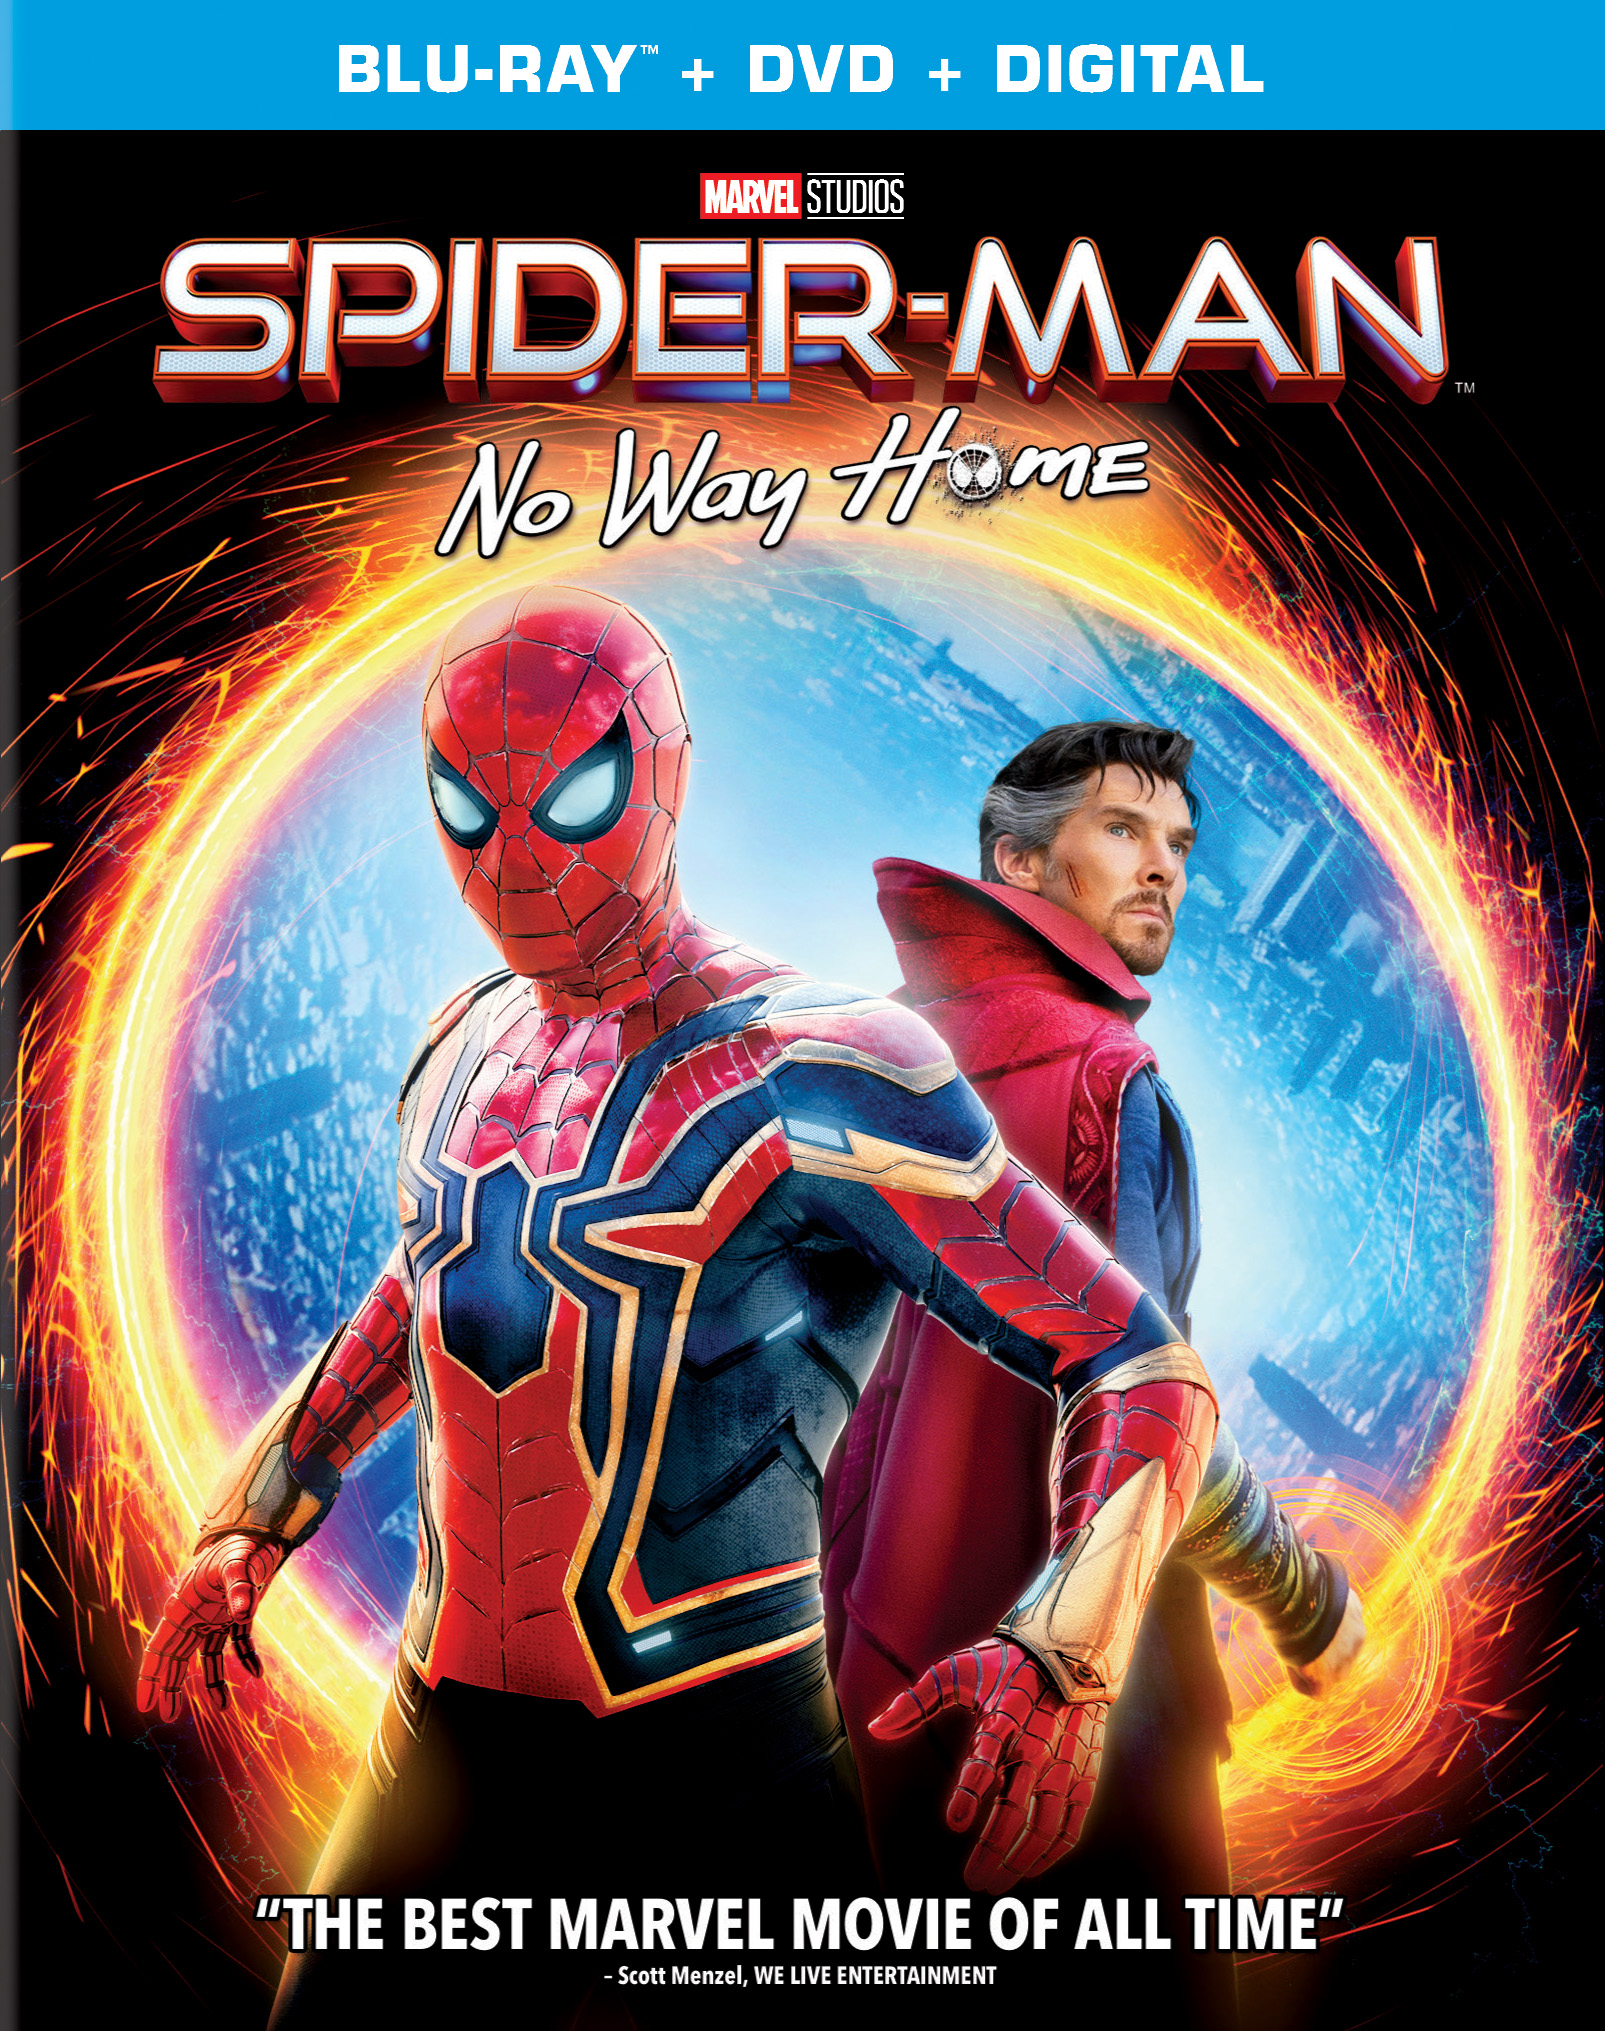 Spider-Man No Way Home BD Cover Art